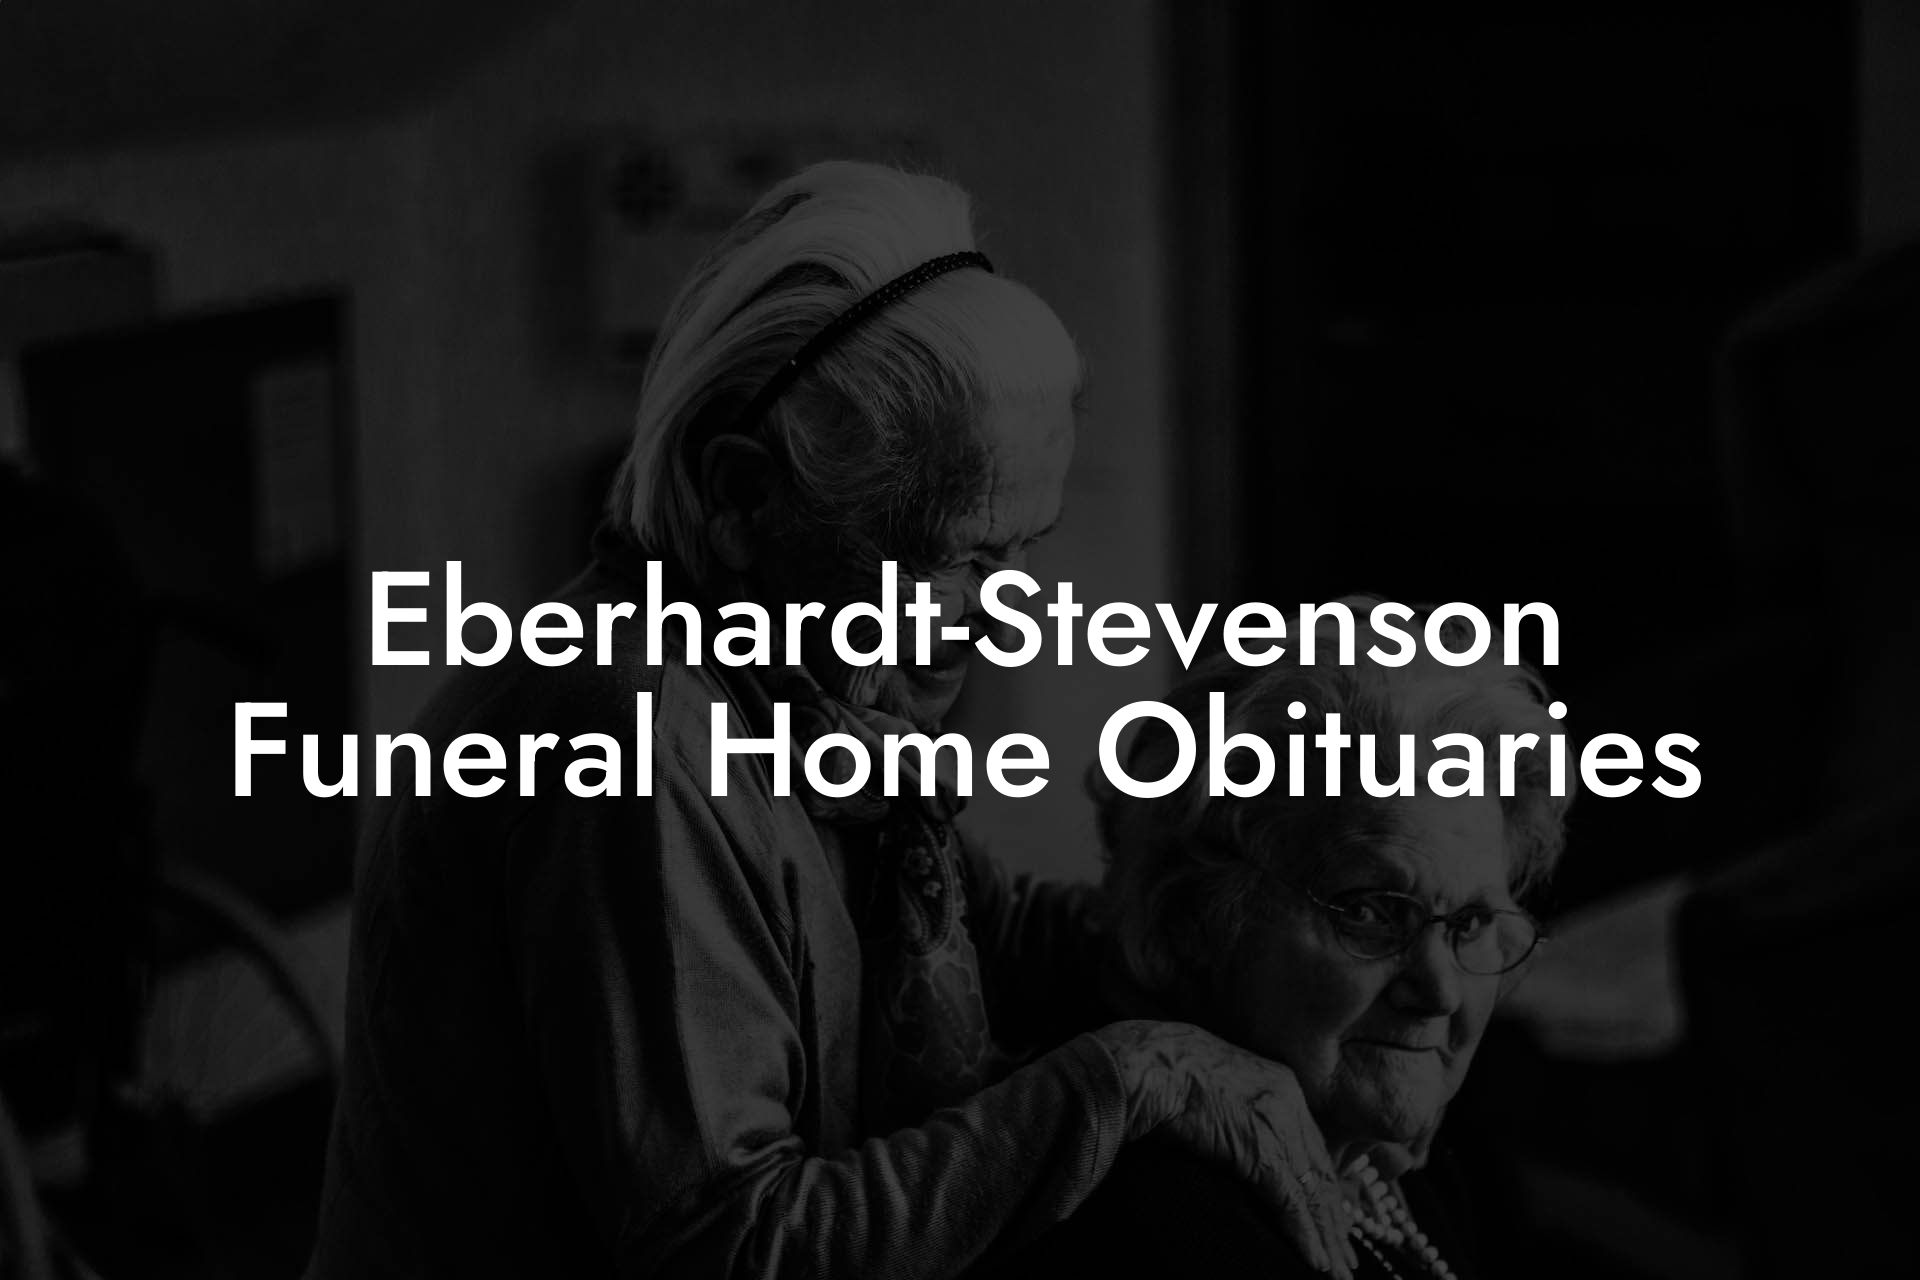 Eberhardt-Stevenson Funeral Home Obituaries